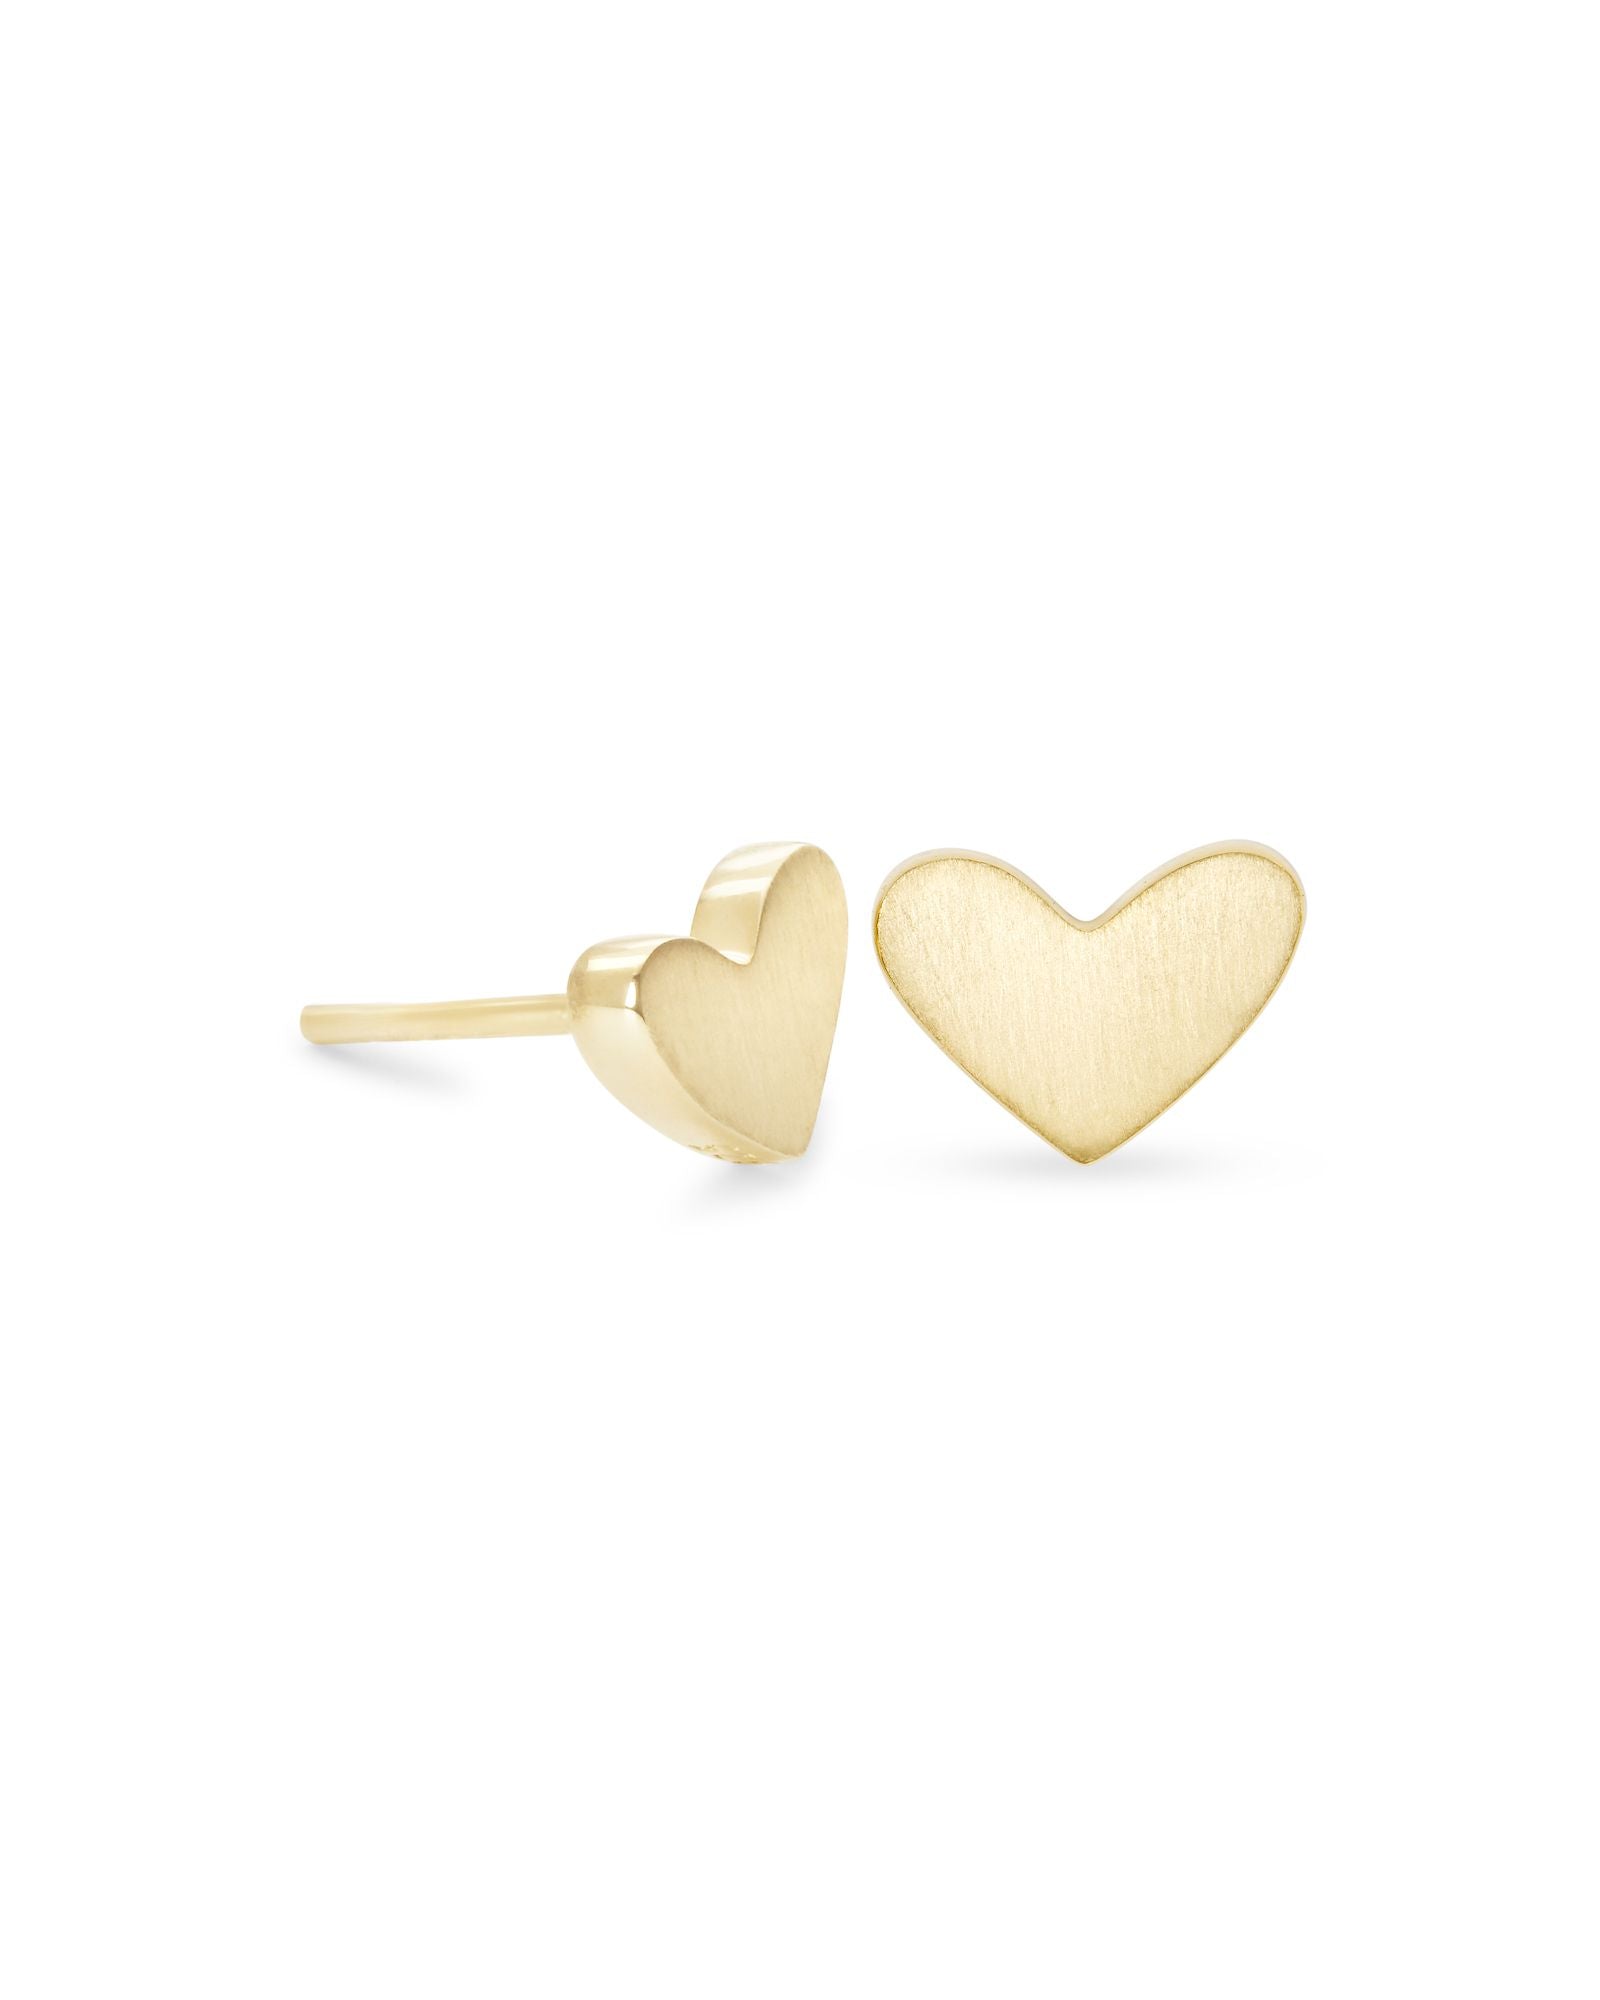 Sale Ari Heart Stud Earrings in Sterling Silver, 18K Gold or Rose Gold Vermeil